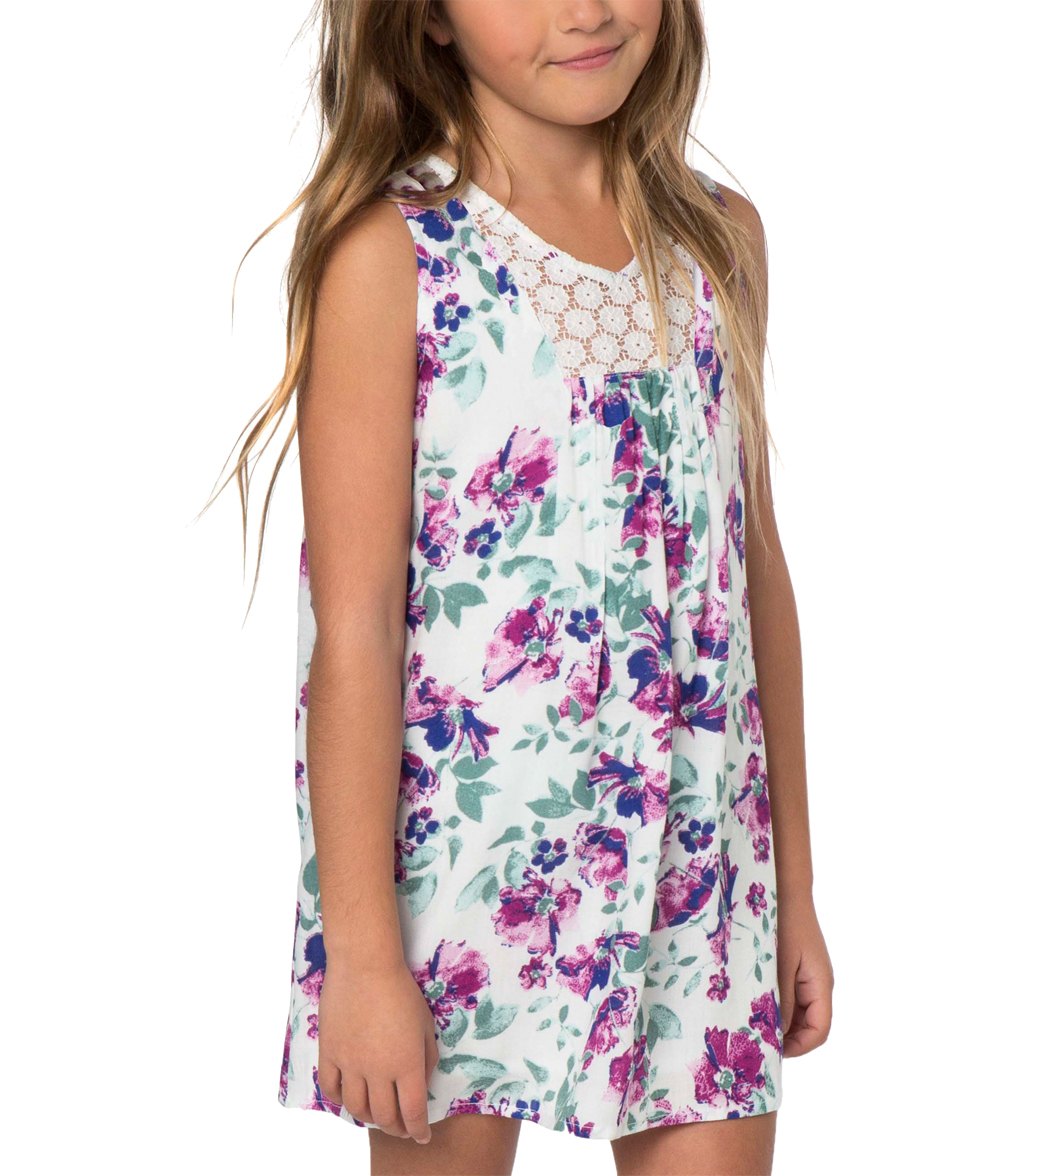 O'neill Girls' Lia Tank Dress Toddler - White 2T Cotton - Swimoutlet.com